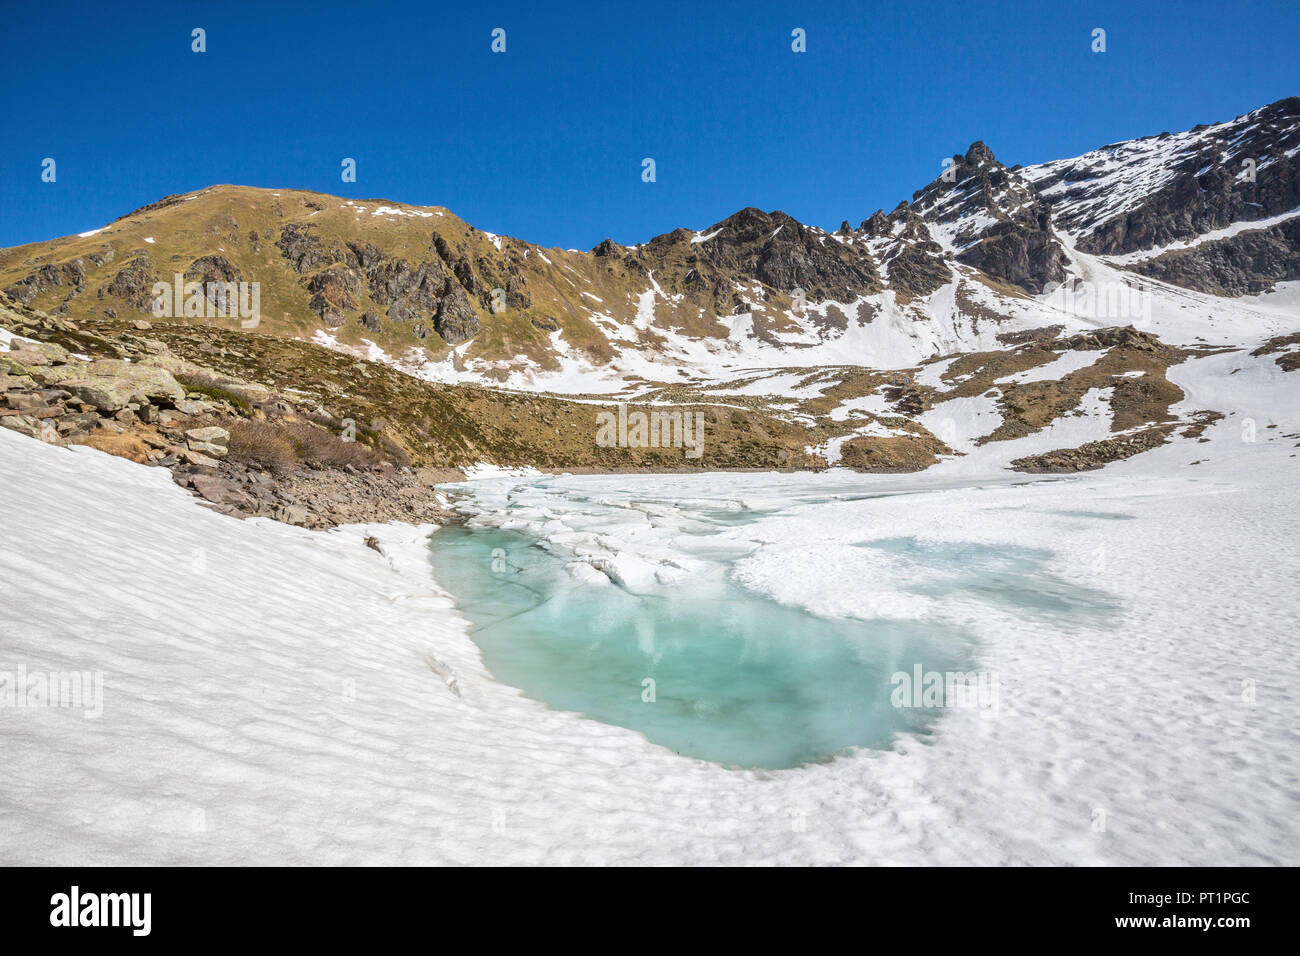 The spring thaw reveals the turquoise water of Laj dal Teo Poschiavo Valley Canton of Graubunden Switzerland Stock Photo